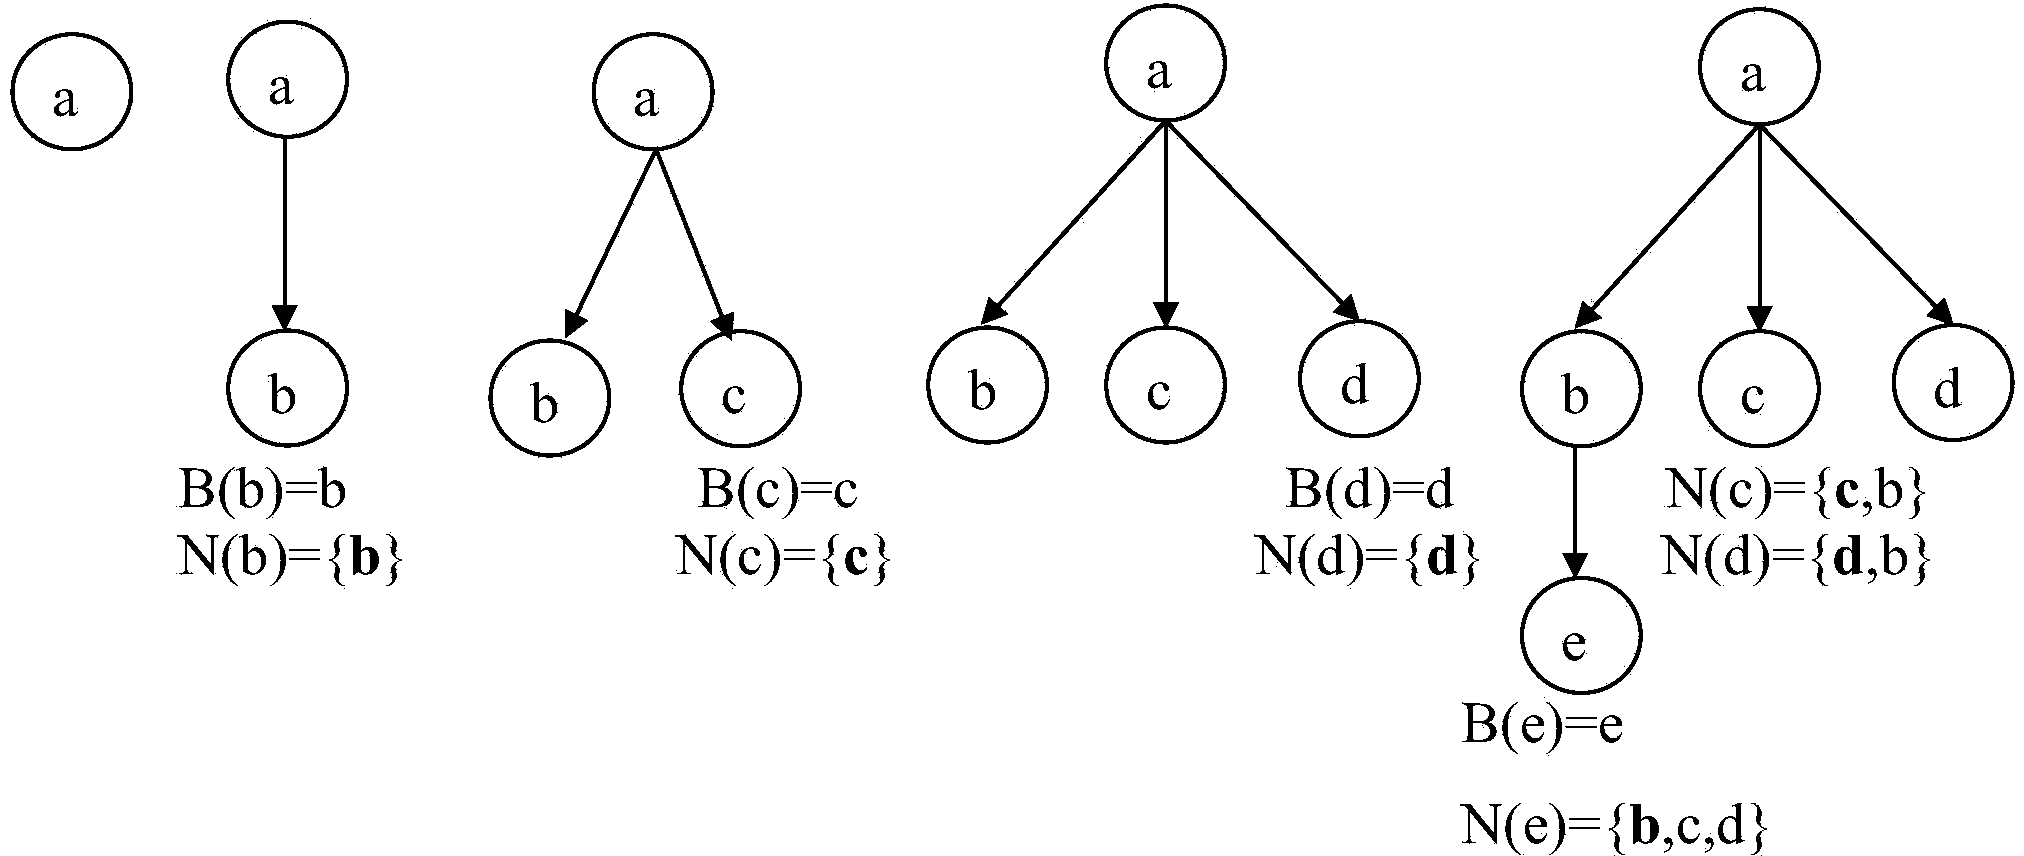 Intra-domain multipath generating method based on spanning tree